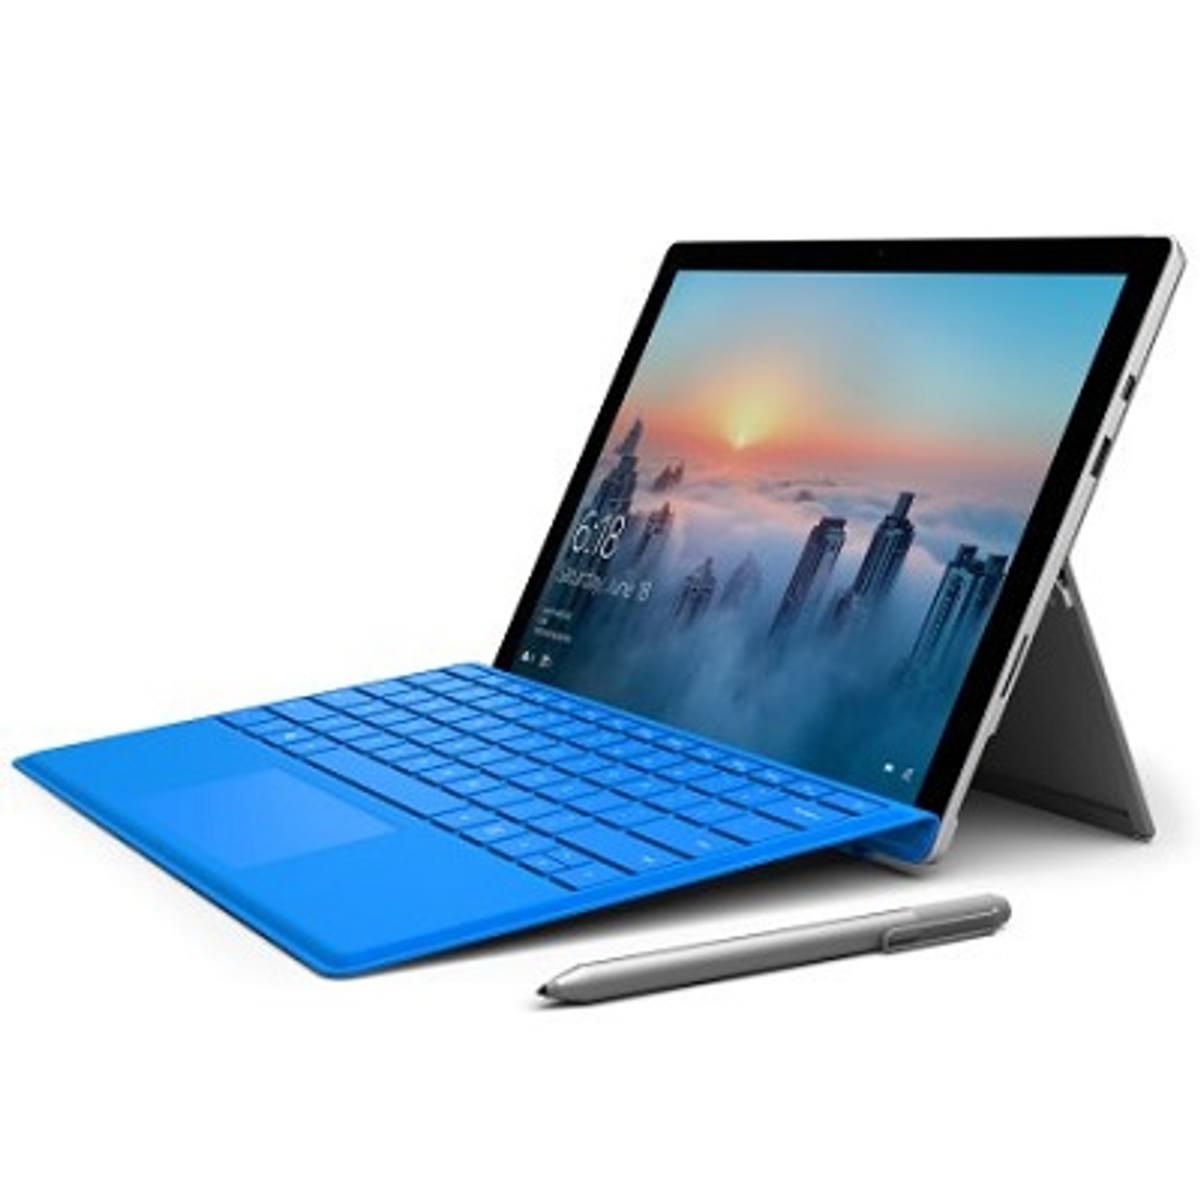 Microsoft Surface Pro 4-scherm kan flikkeren image